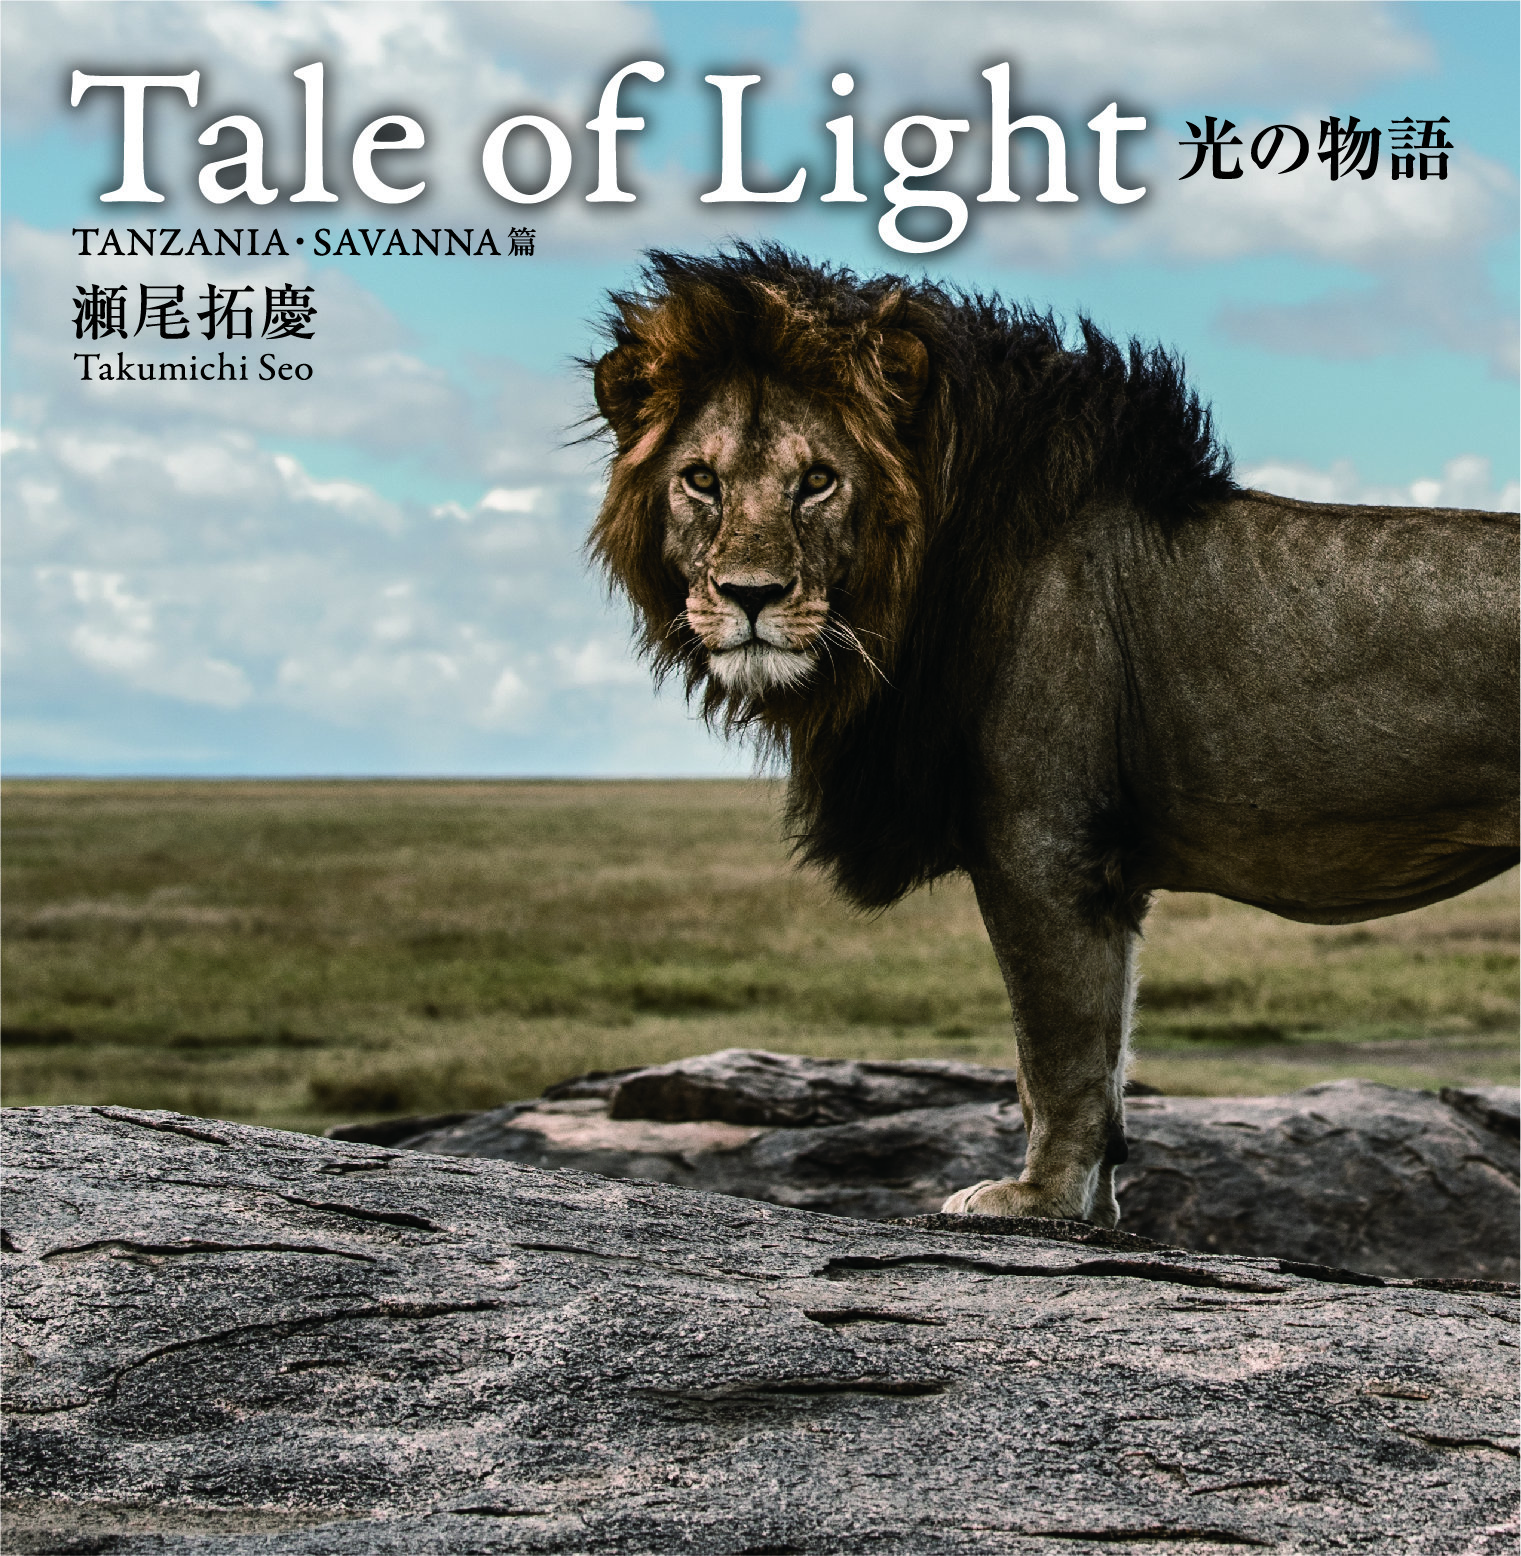 Tale of Light-光の物語-TANZANIA SAVANNA篇(写真集)